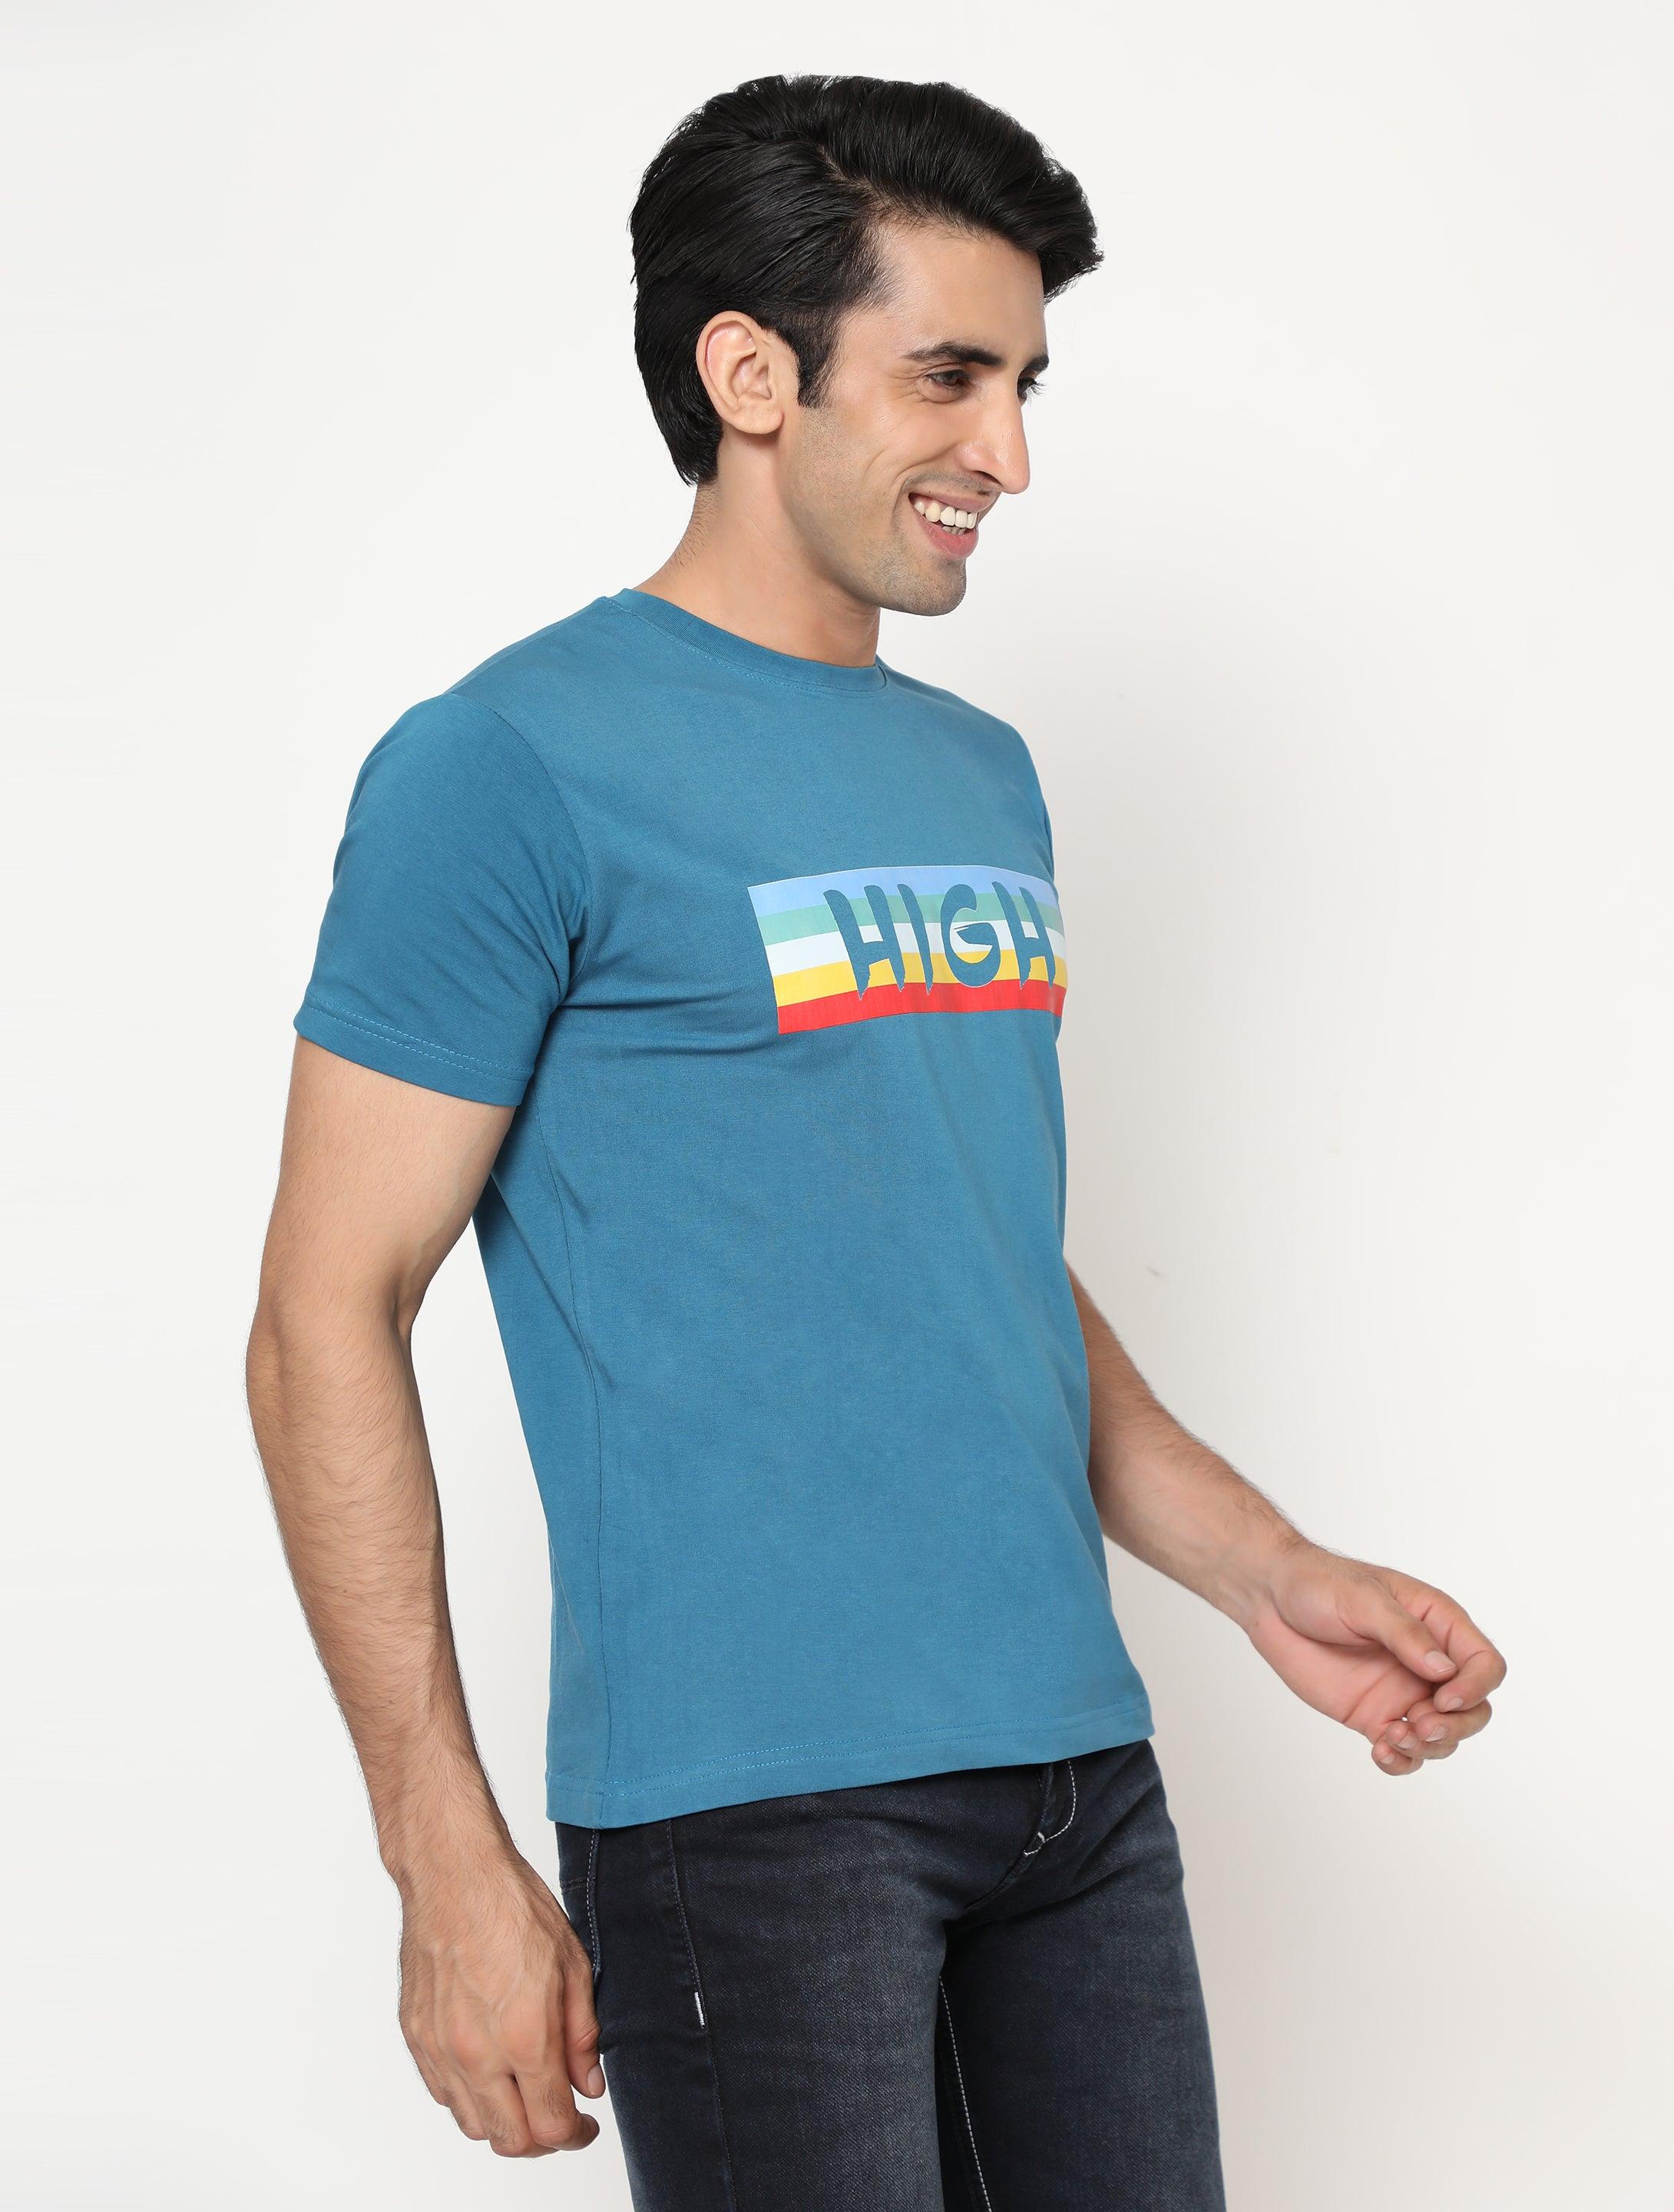 Hemp T-Shirt -PRINT-HIGH - Cannabie